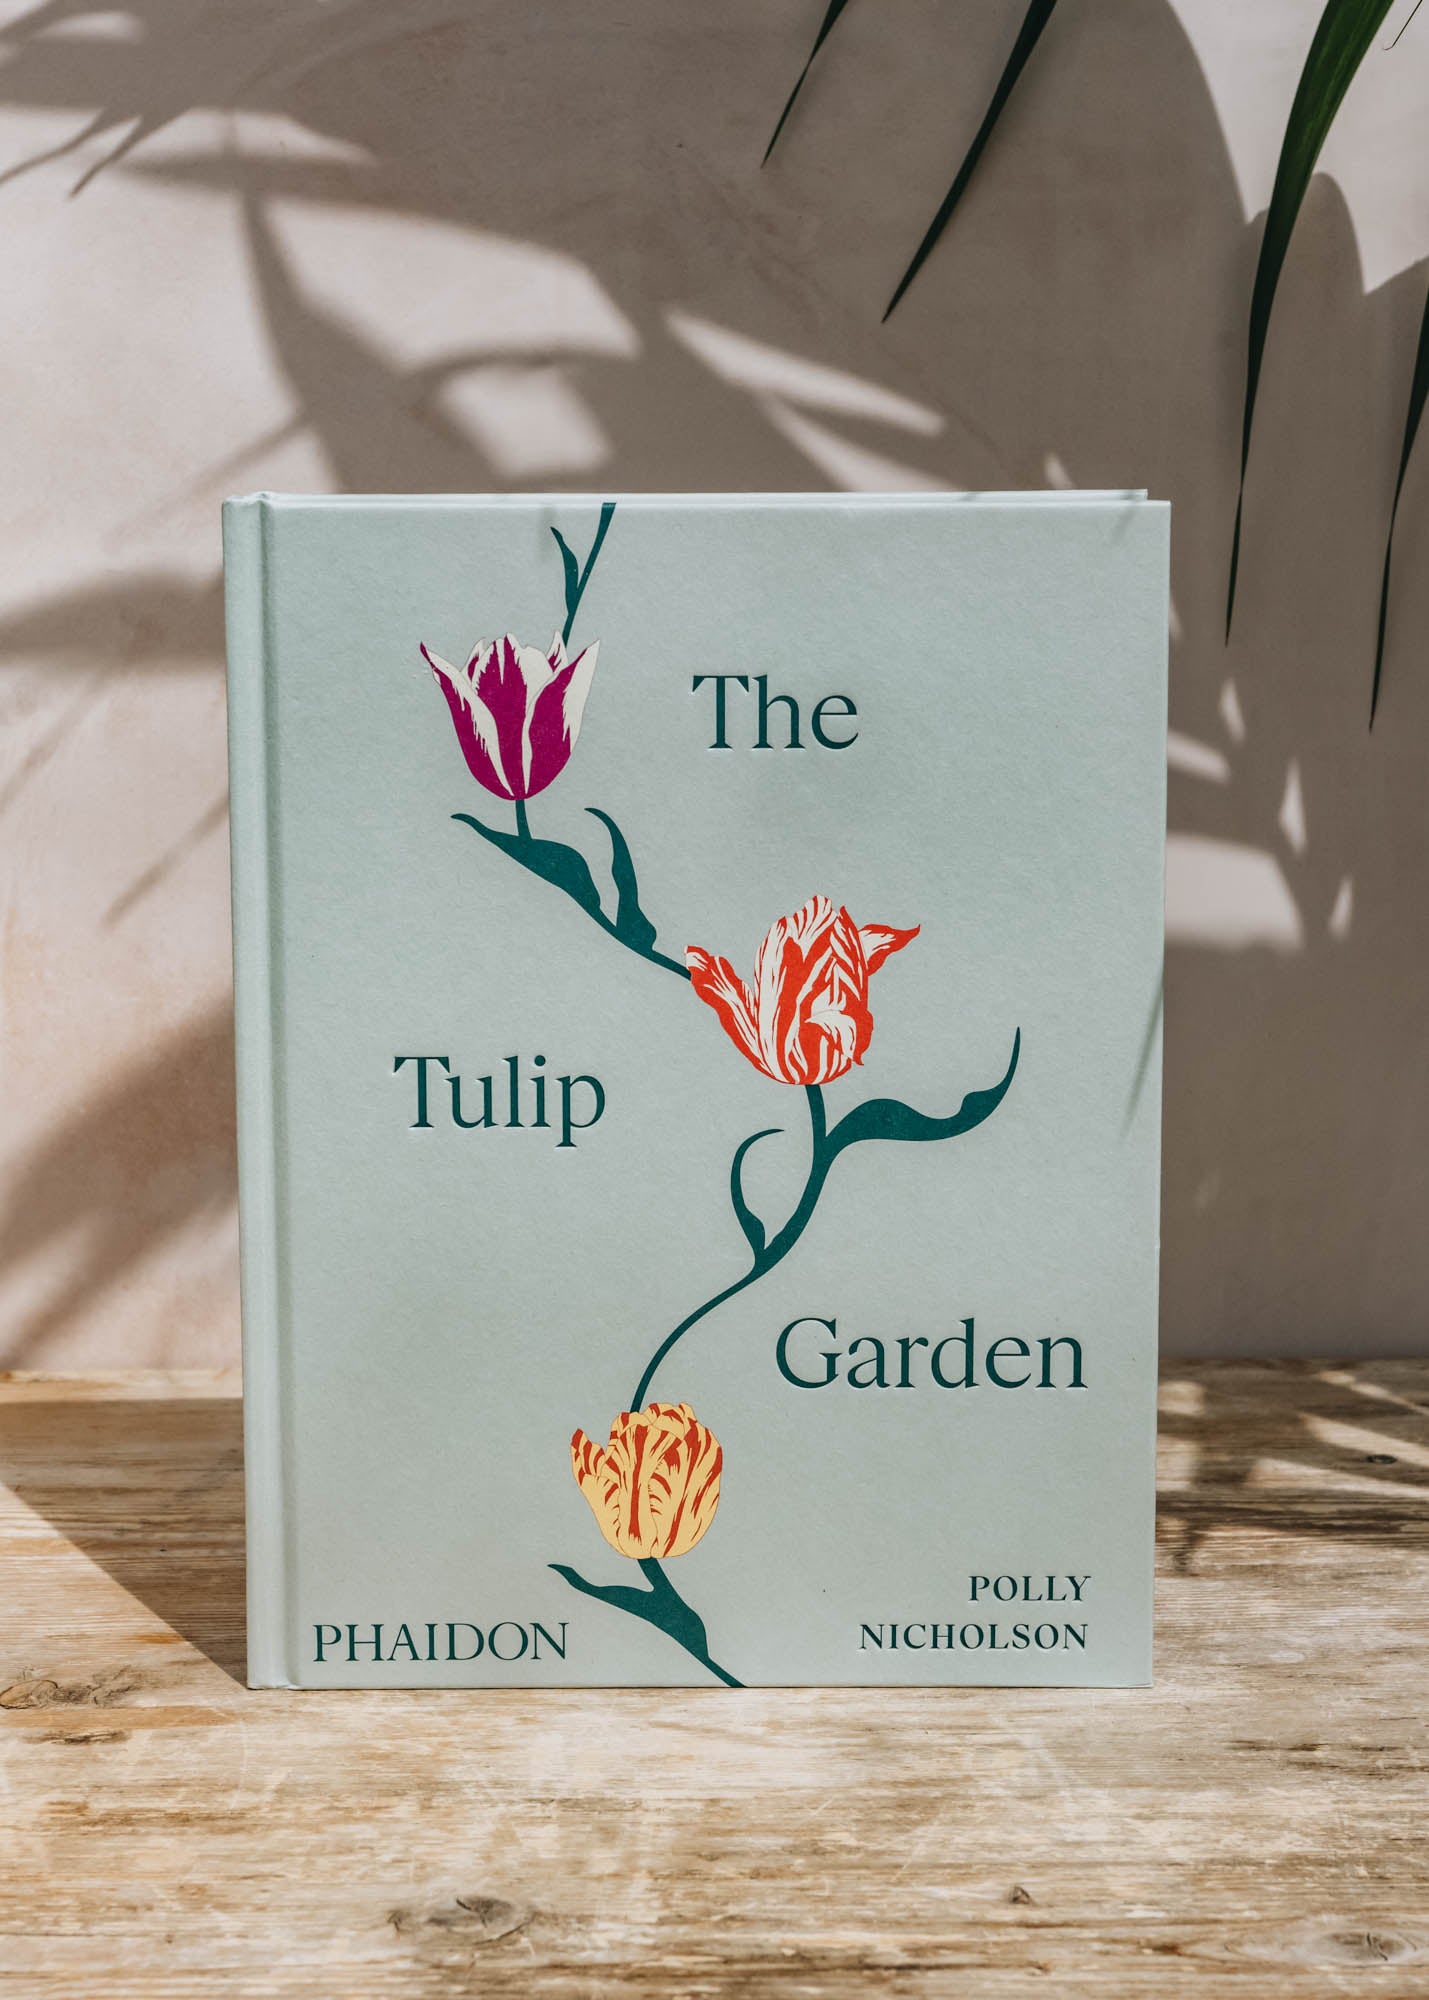 The Tulip Garden by Polly Nicholson